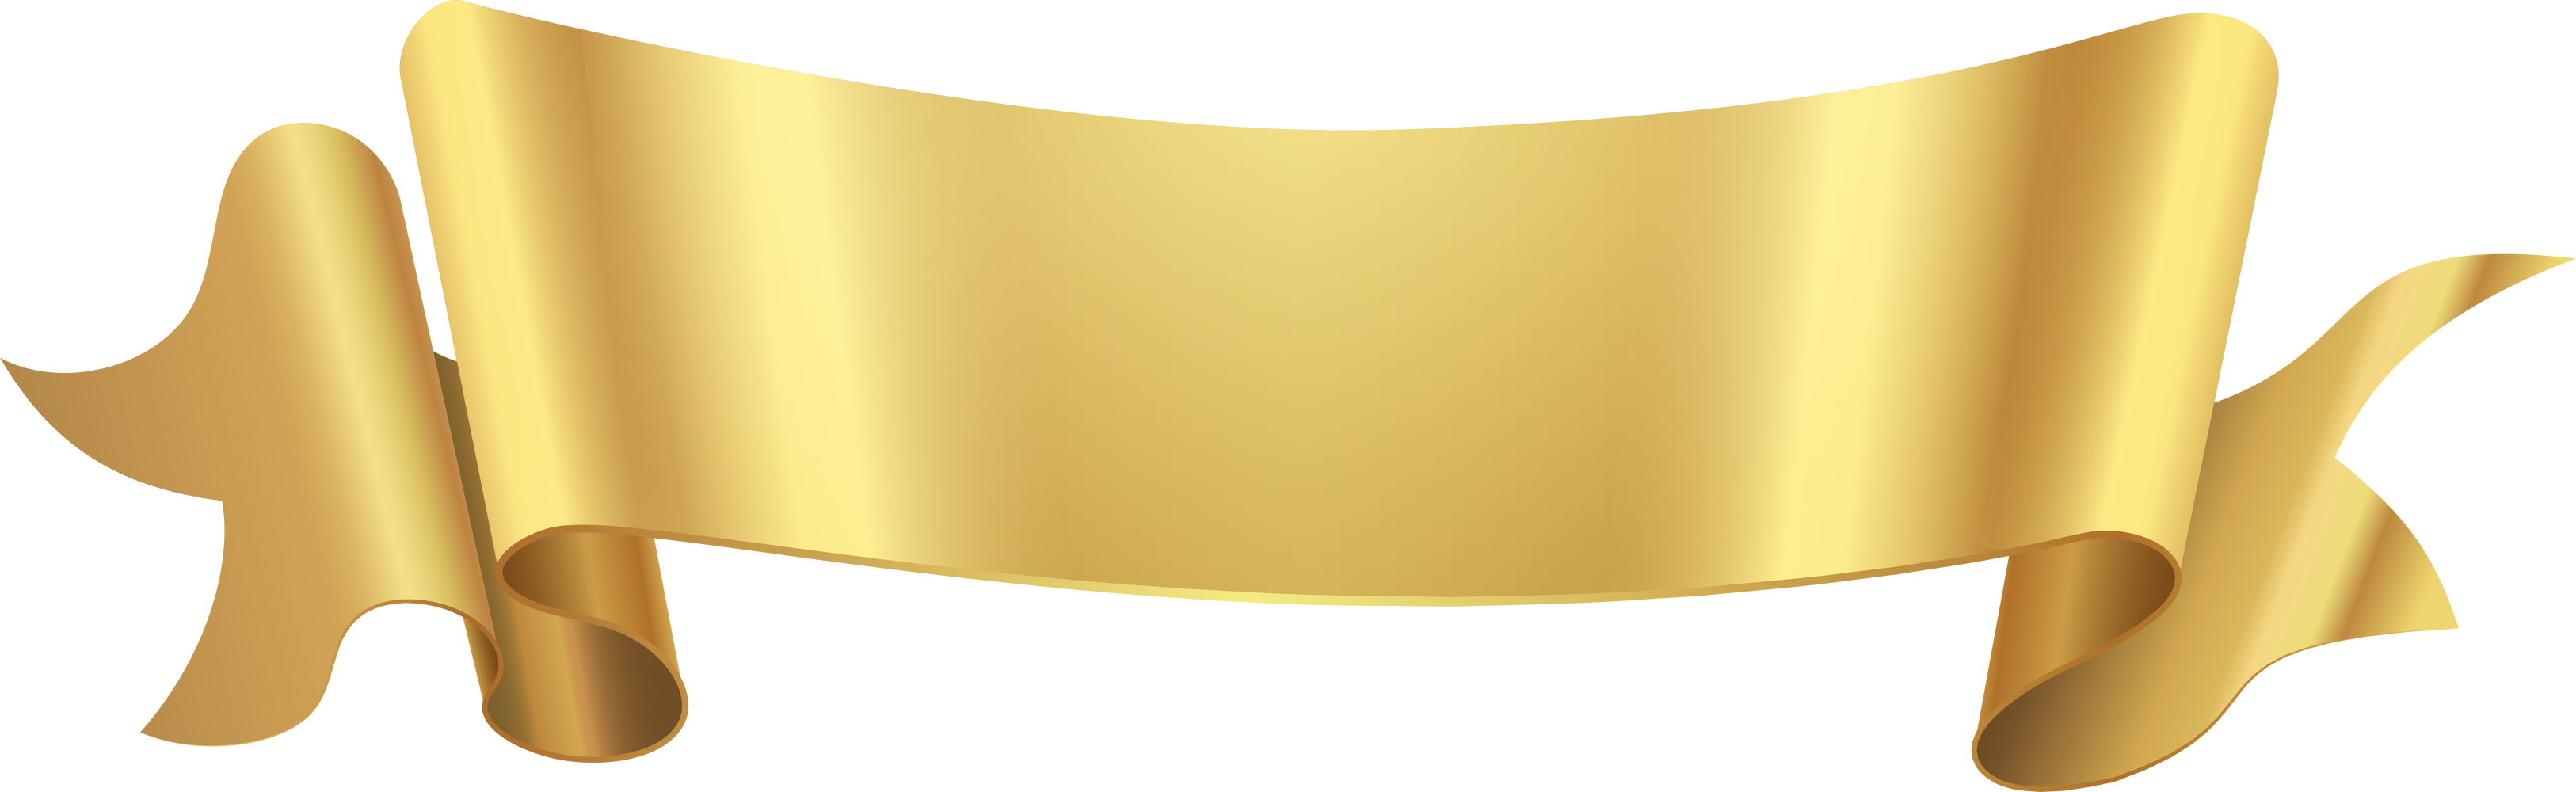 Golden ribbons and gold award banner